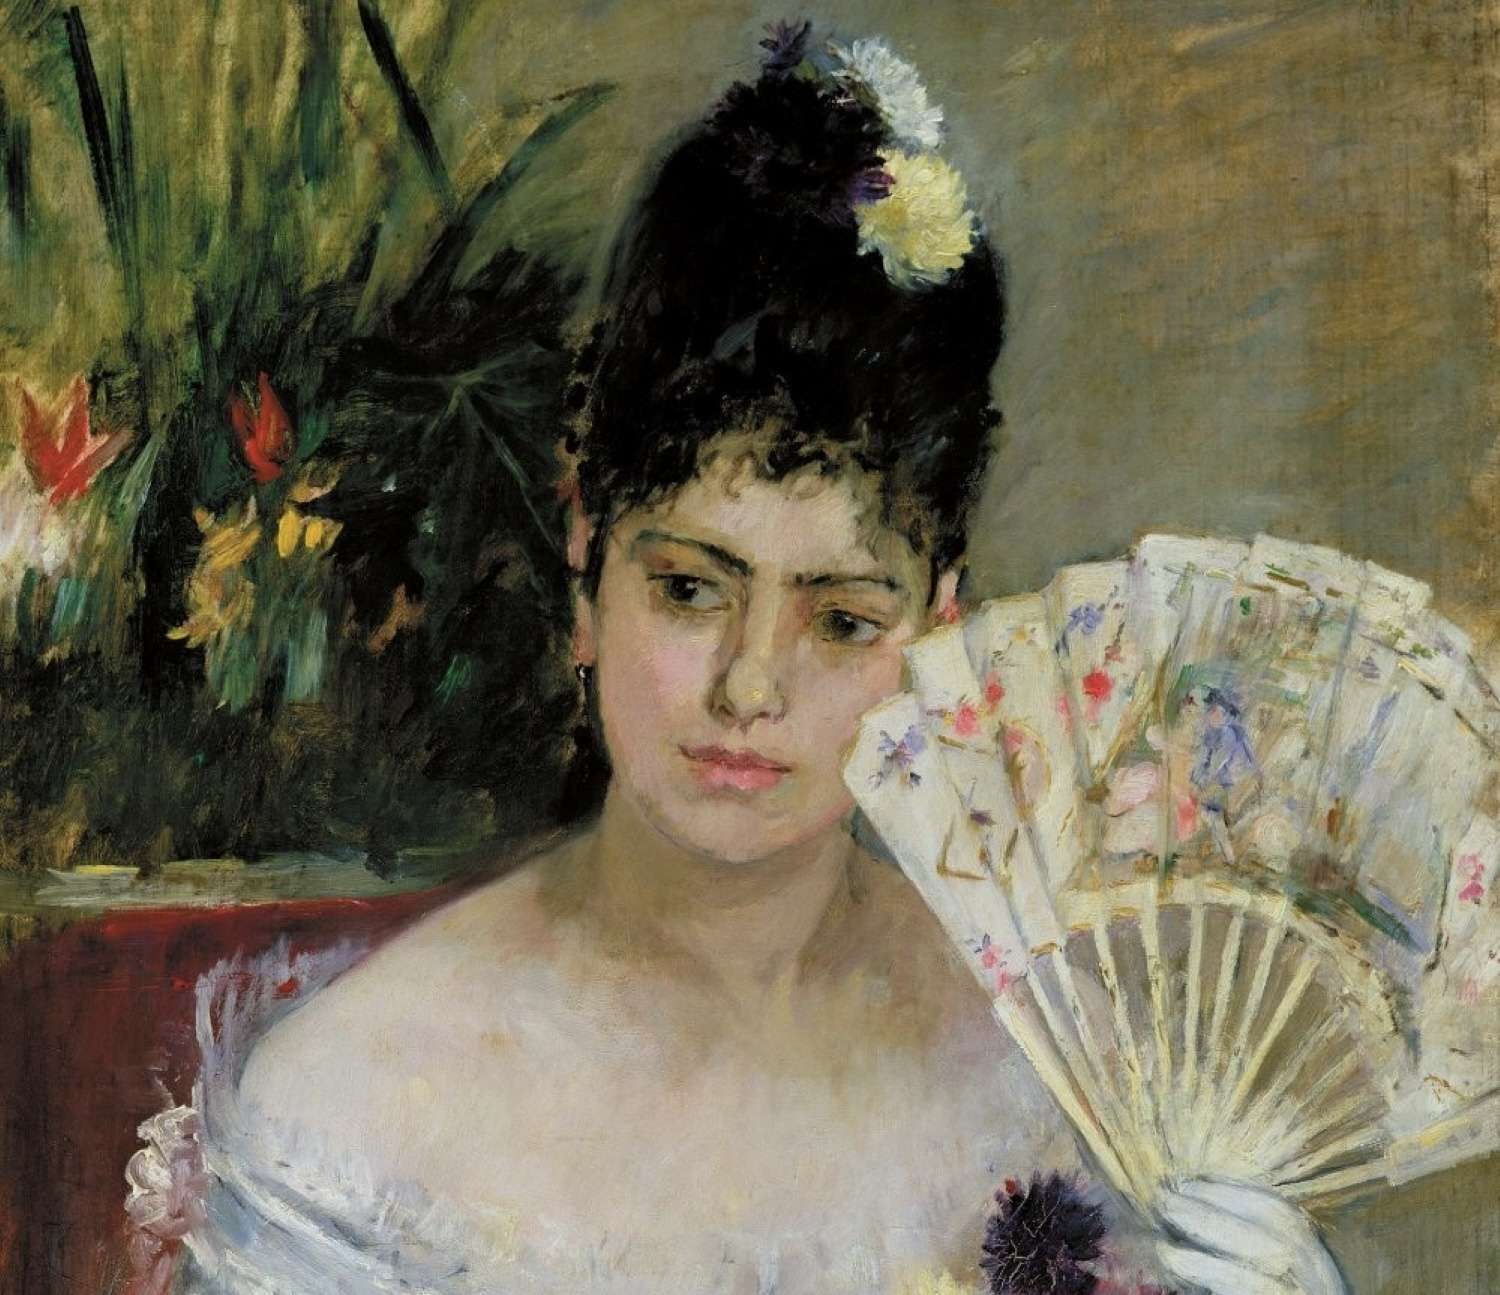 La Gam di Torino a ottobre celebra “Berthe Morisot. Pittrice impressionista”